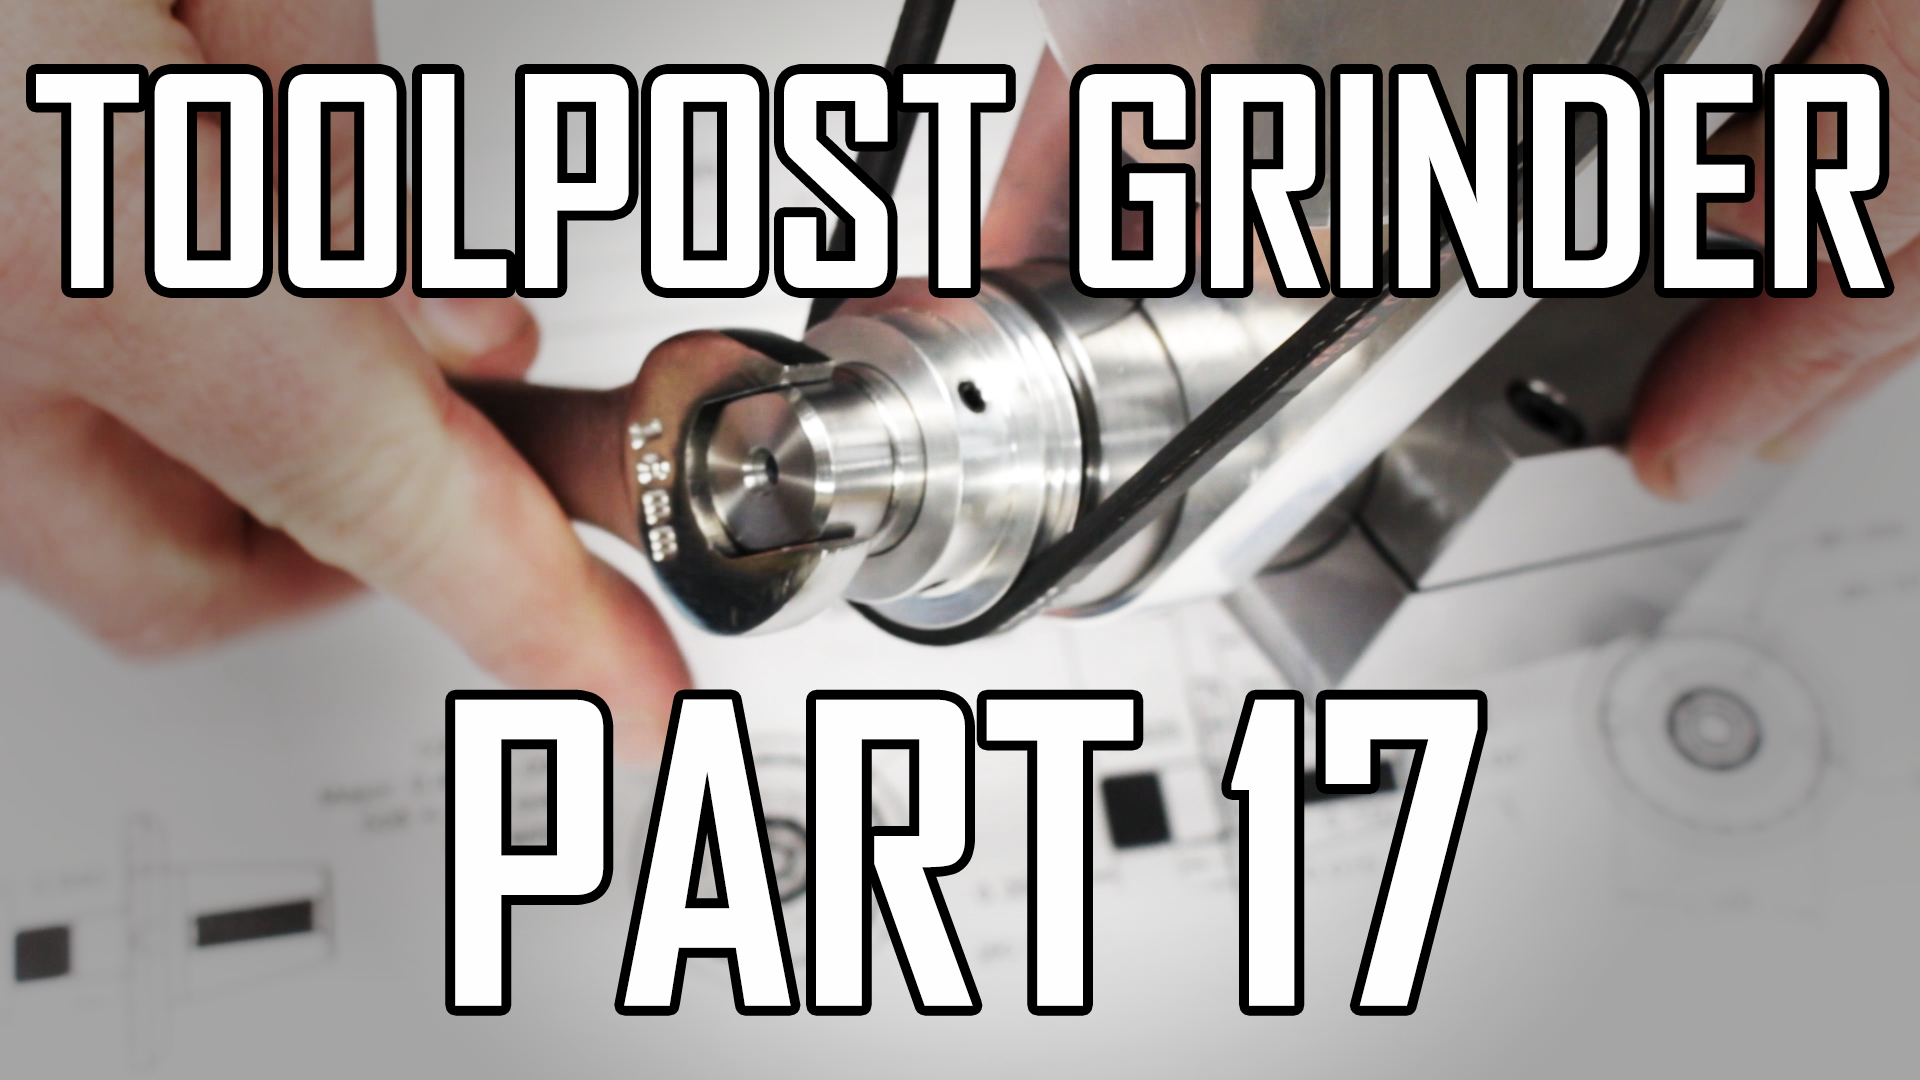 Toolpost Grinder Part 17: Making the drawbar 2